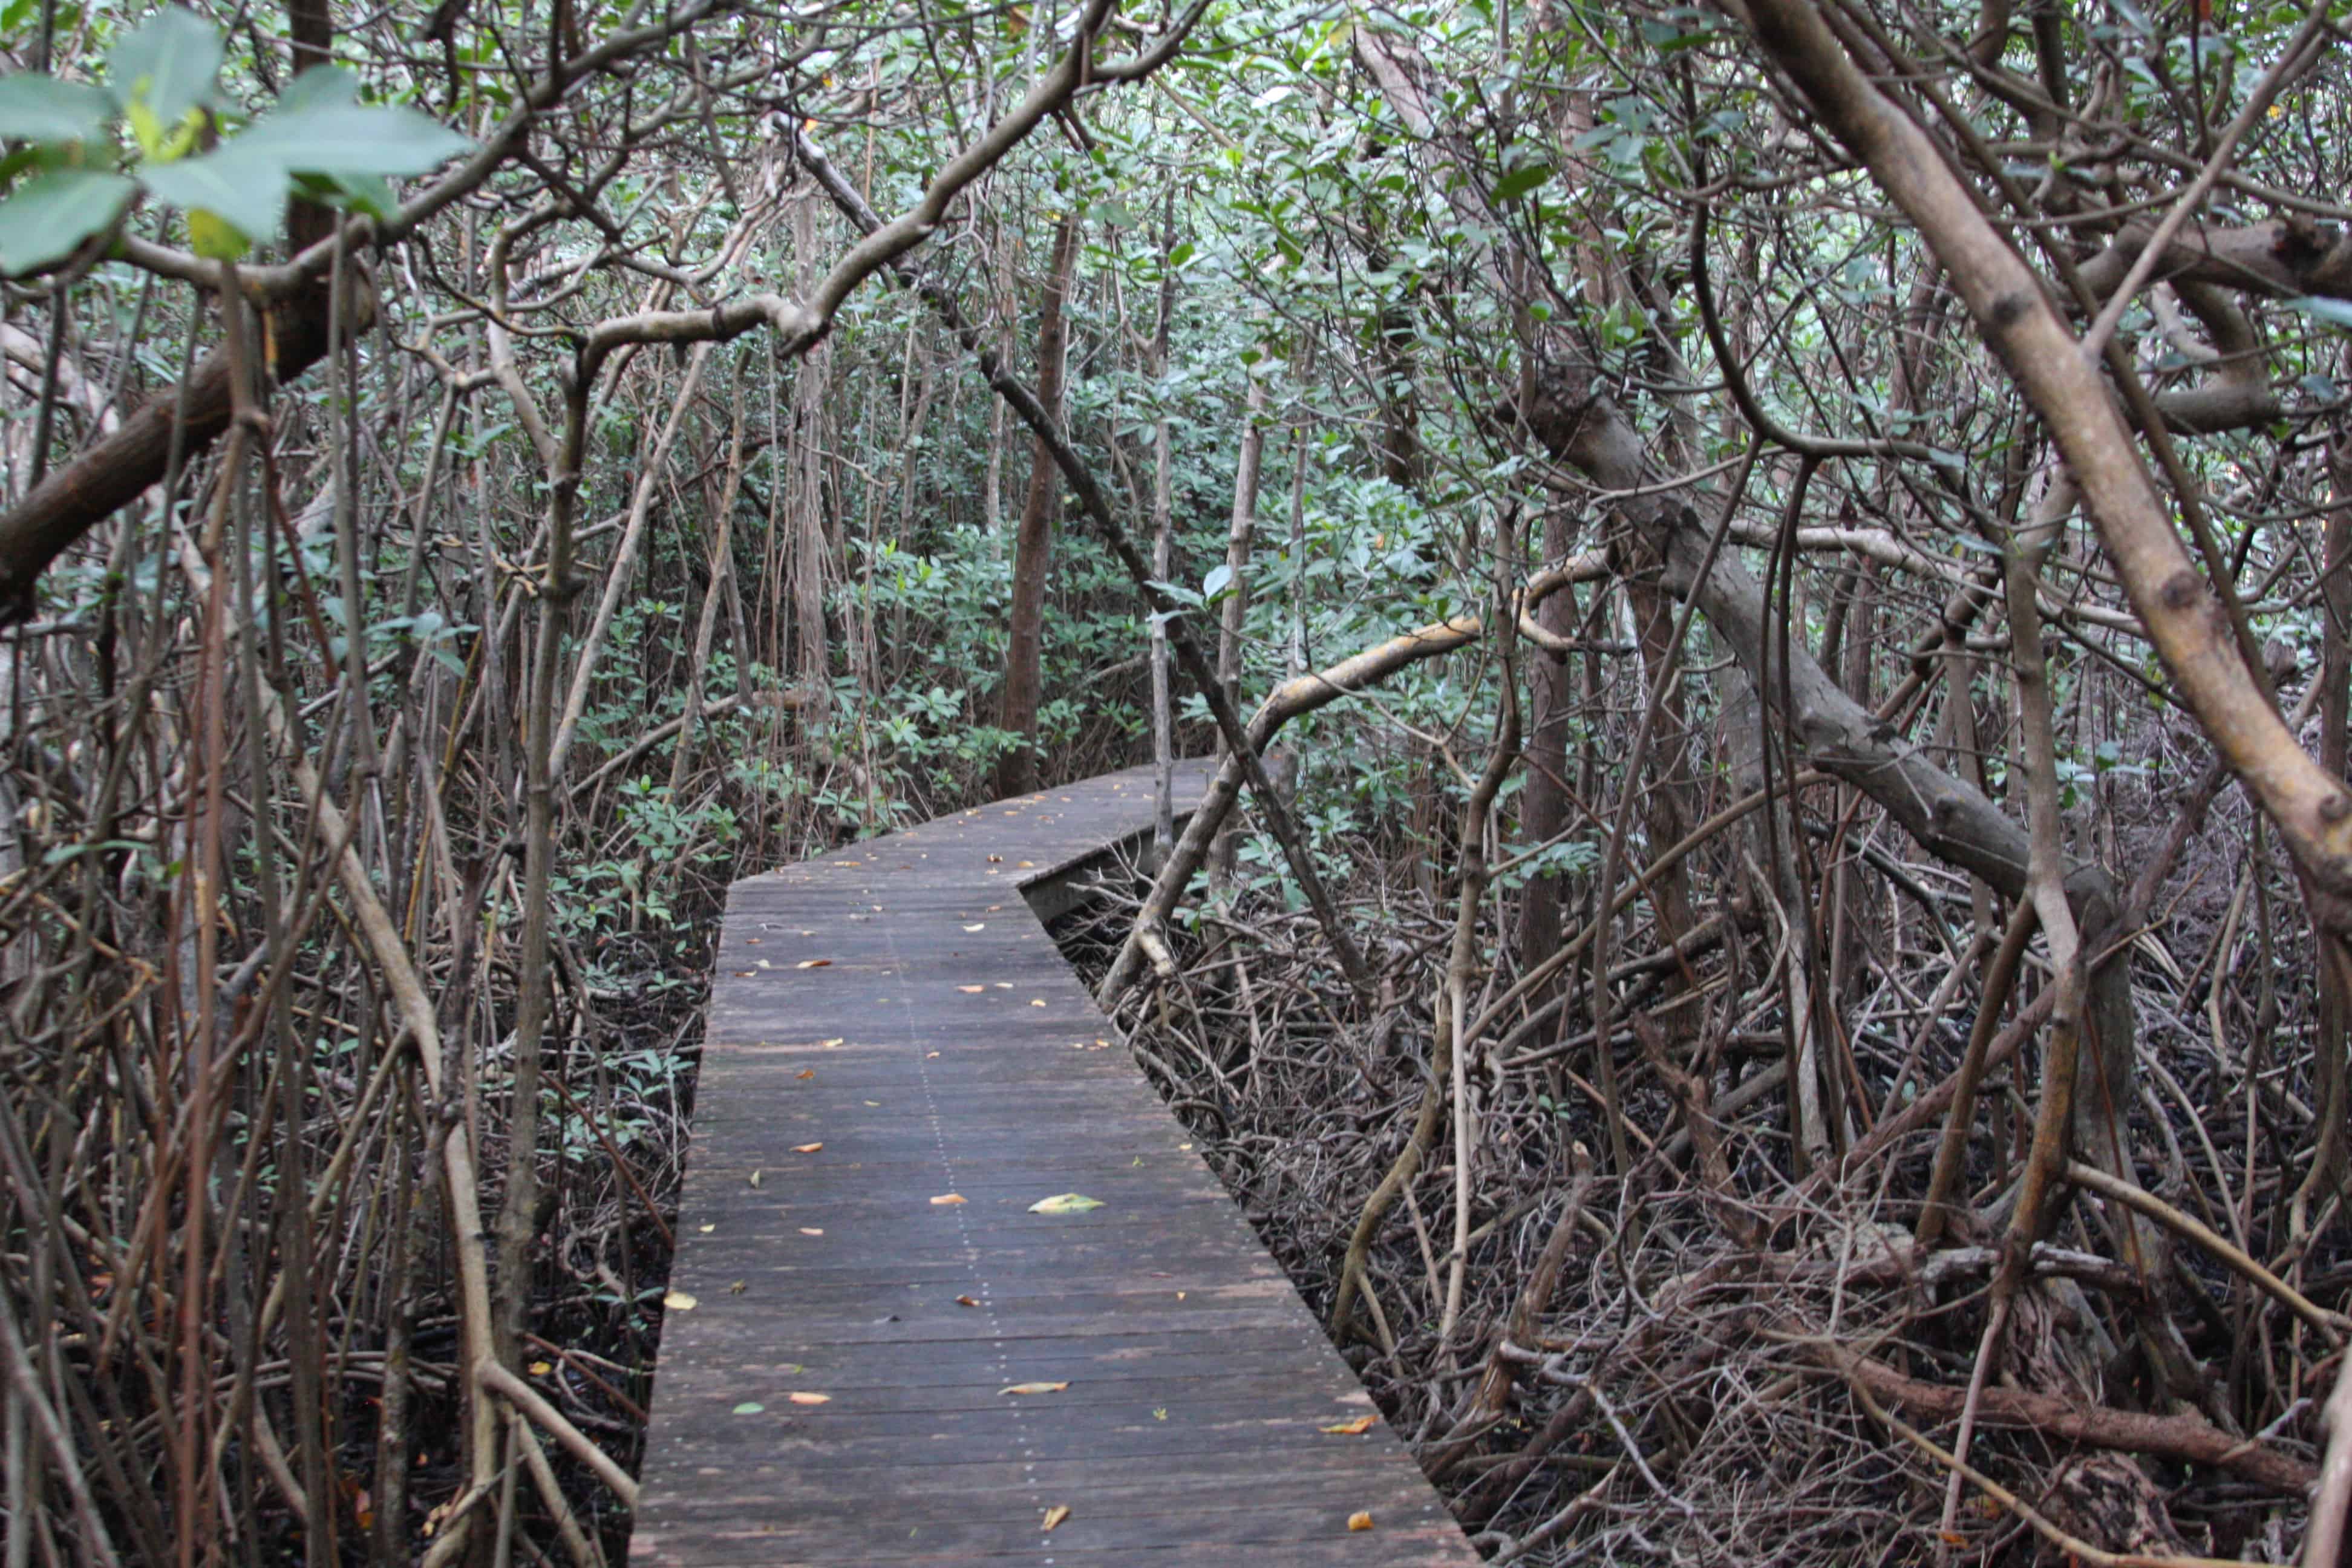 Interpretative walkway through one of the mangrove areas, greatly threatened in BVI. Copyright: Dr Mike Pienkowski